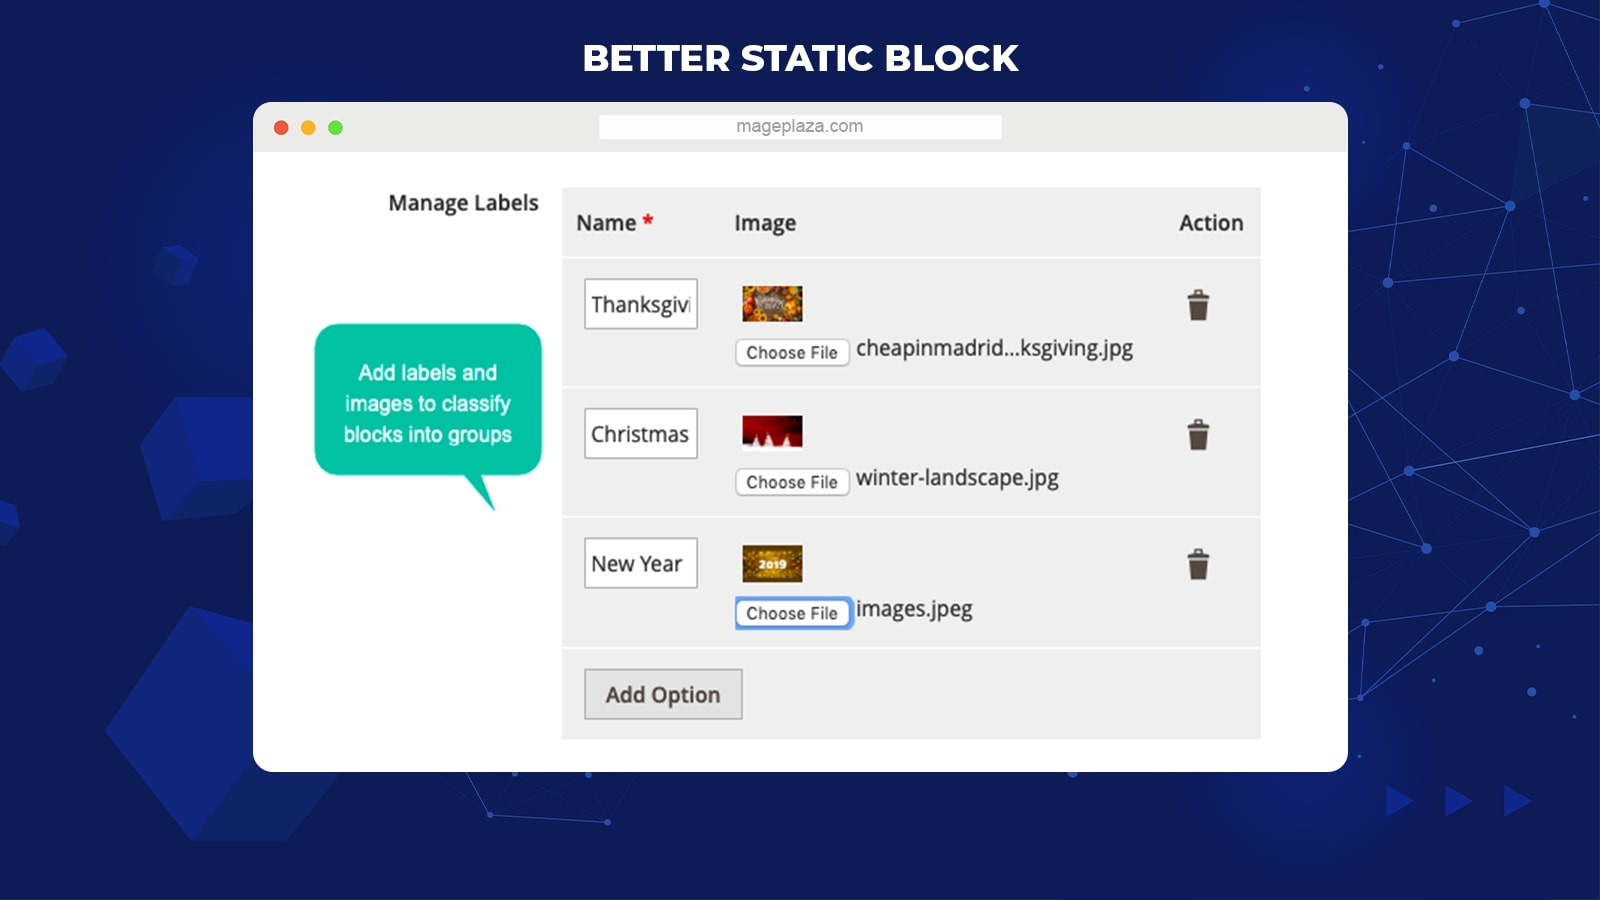 magento 2 static blocks